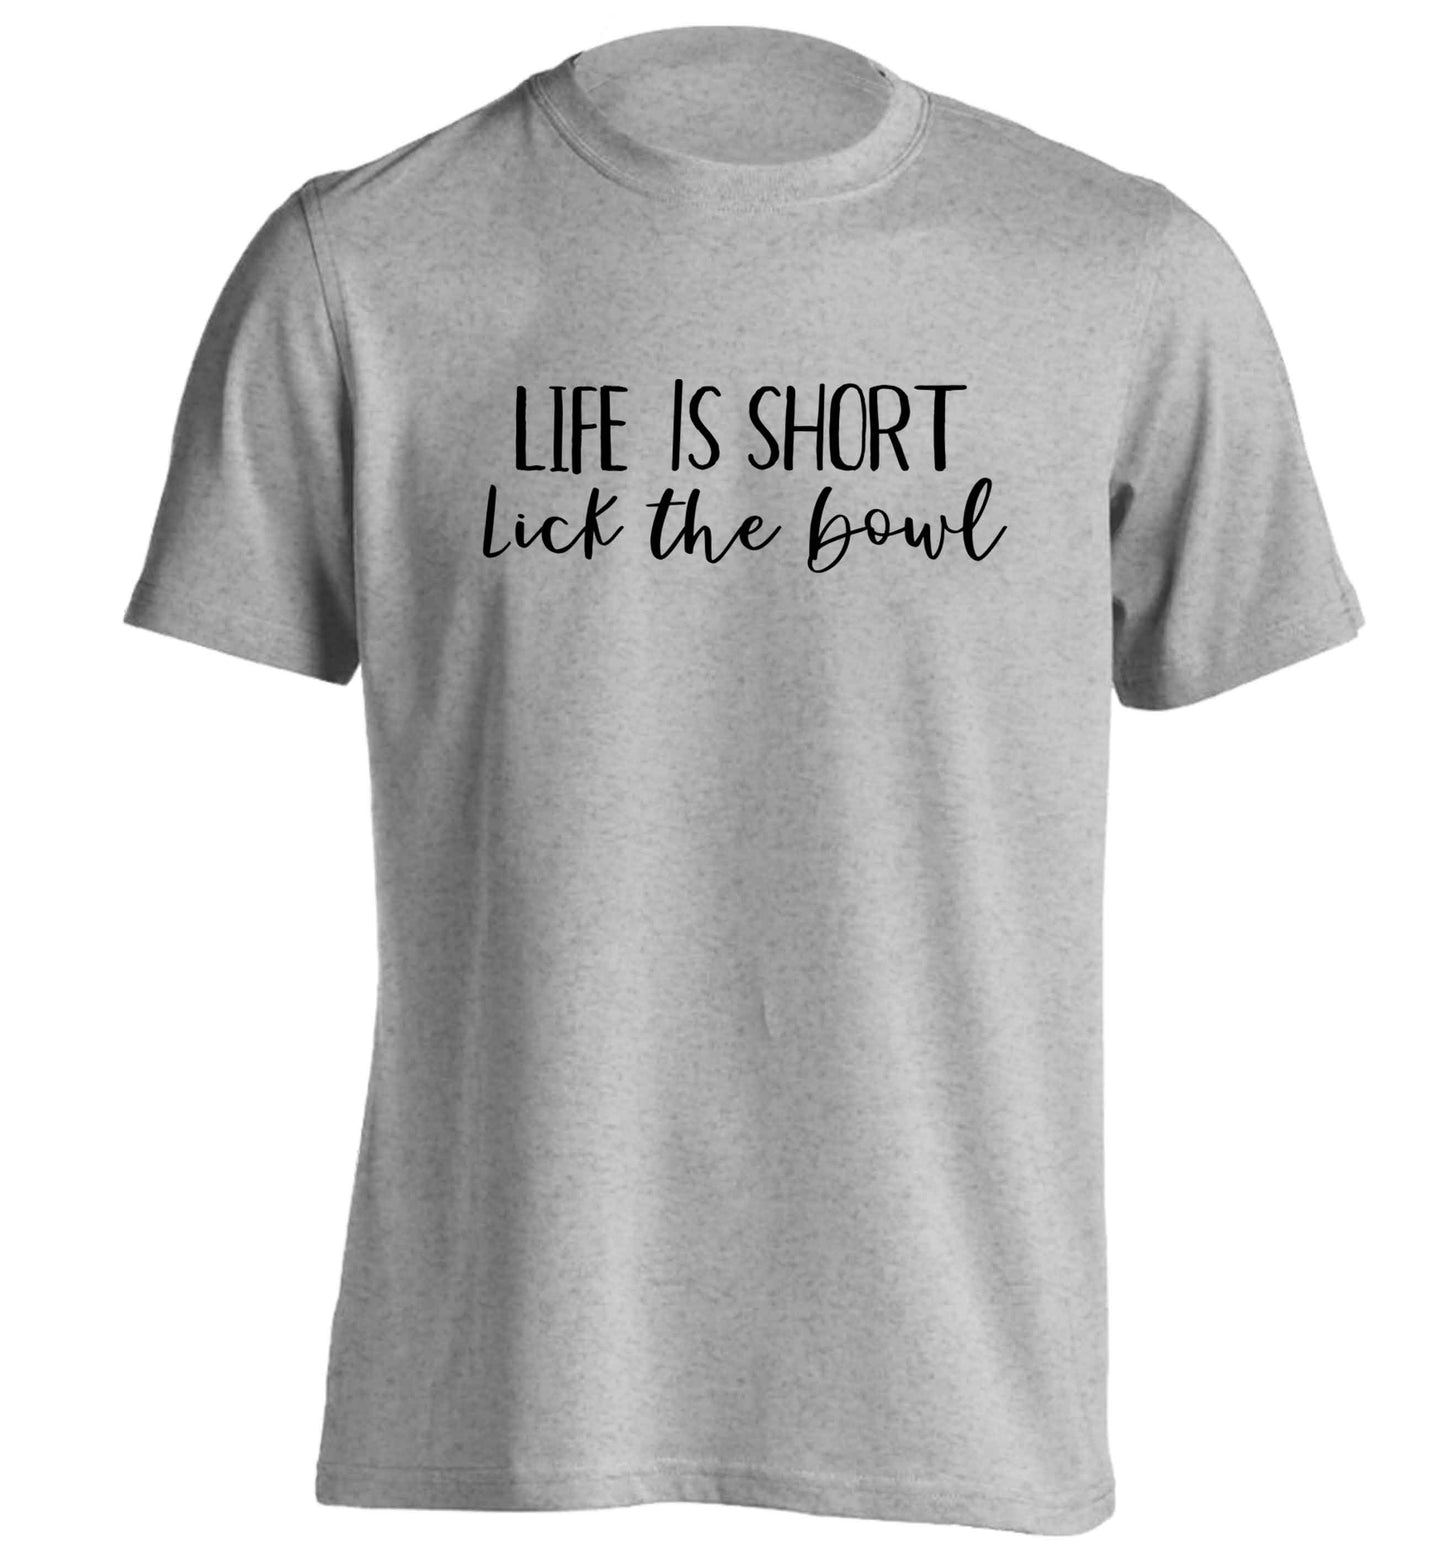 Life is short lick the bowl adults unisex grey Tshirt 2XL